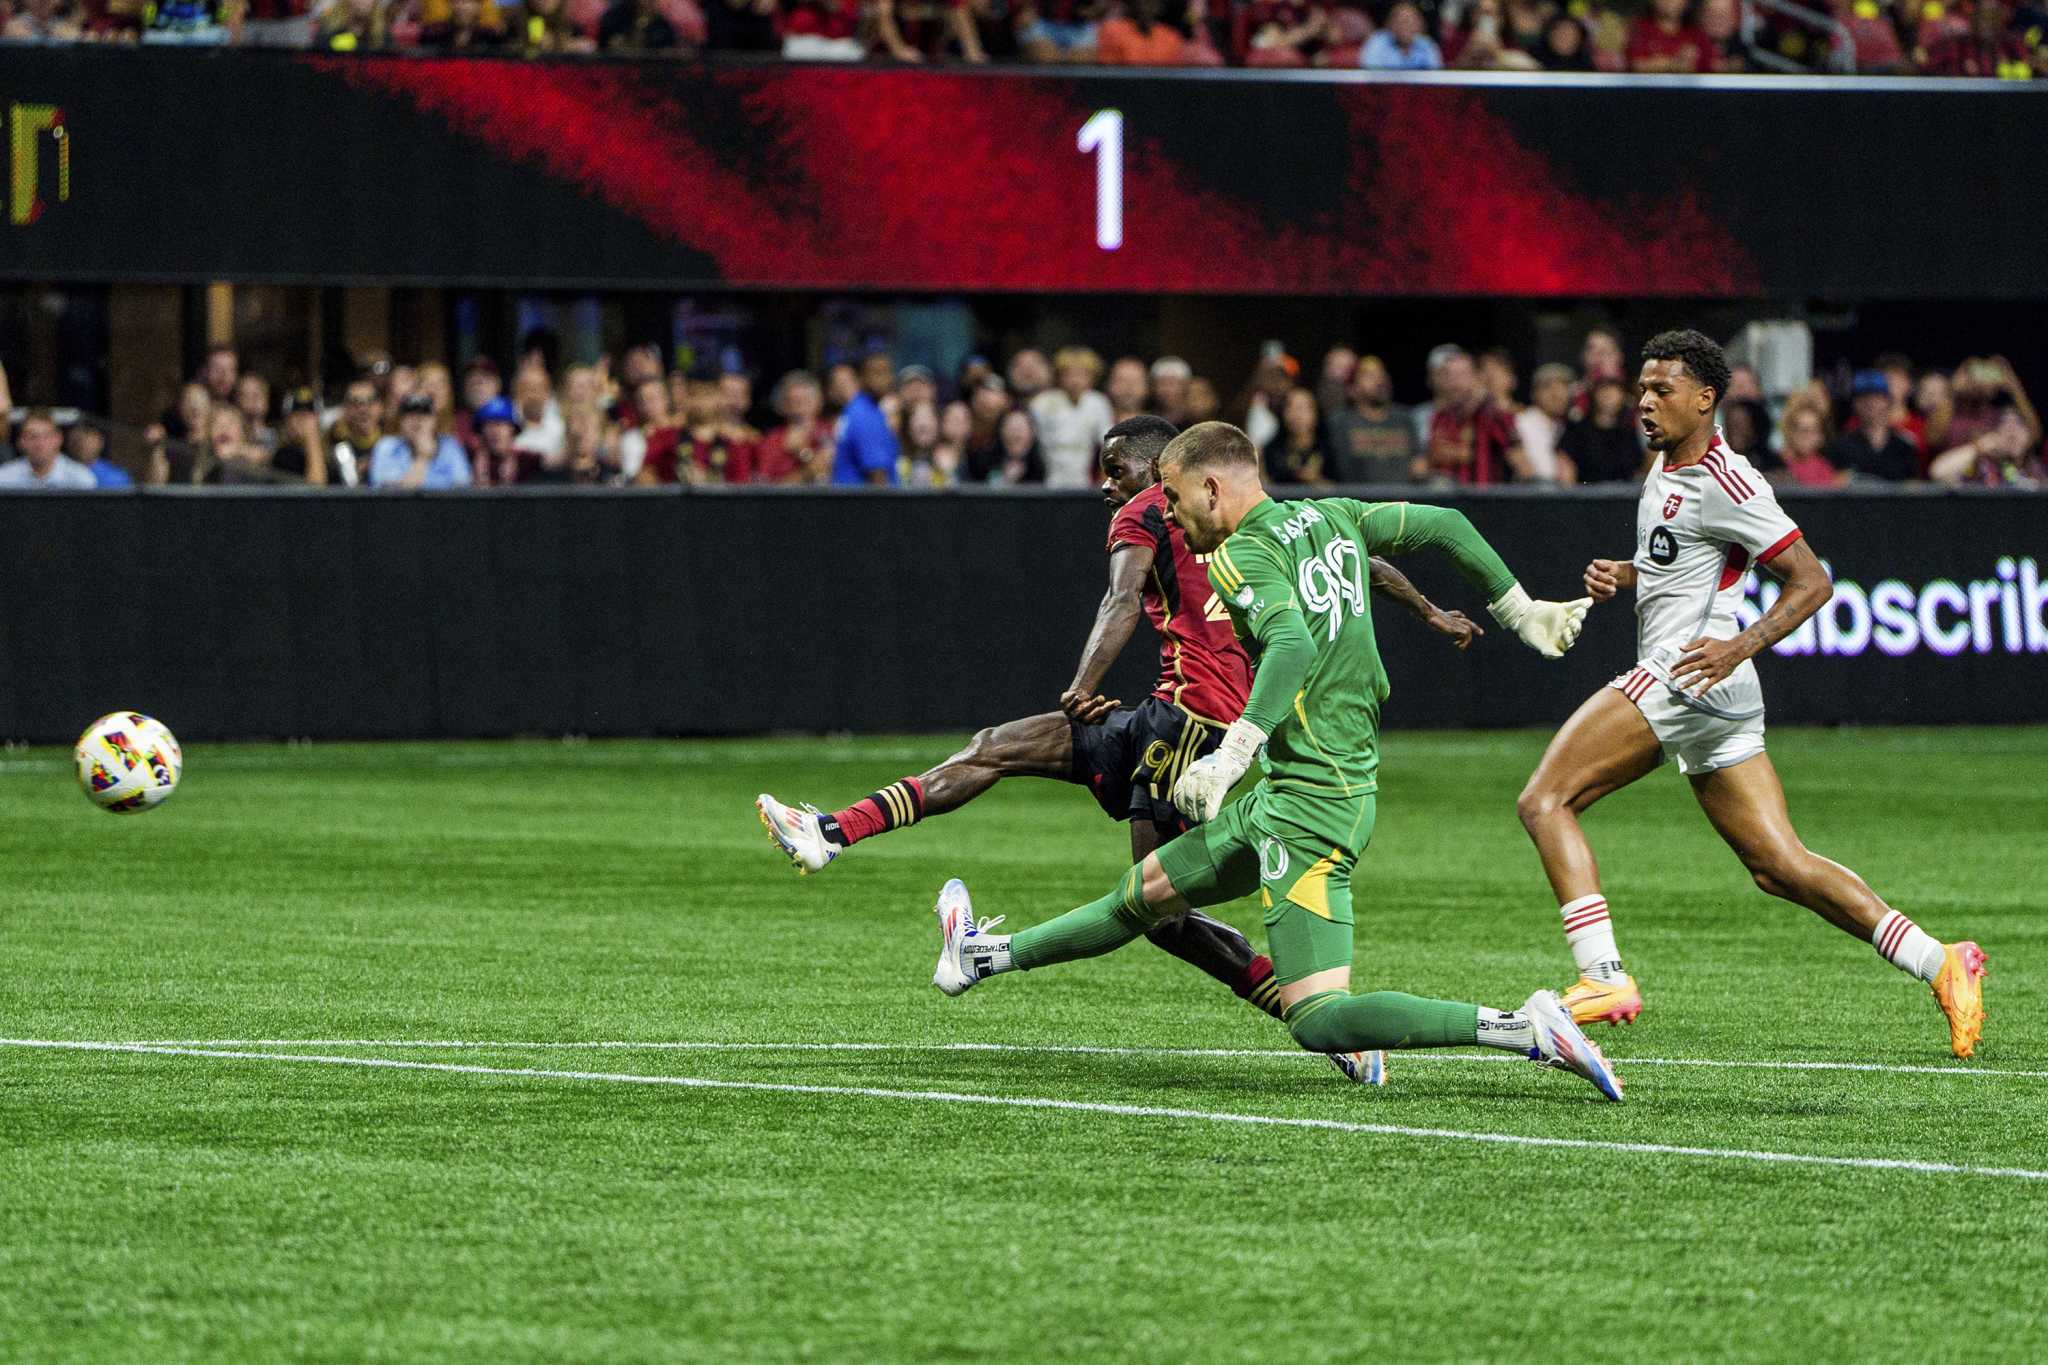 Jamal Thiaré' steals ball from goalkeeper, hits game-winner for Atlanta United